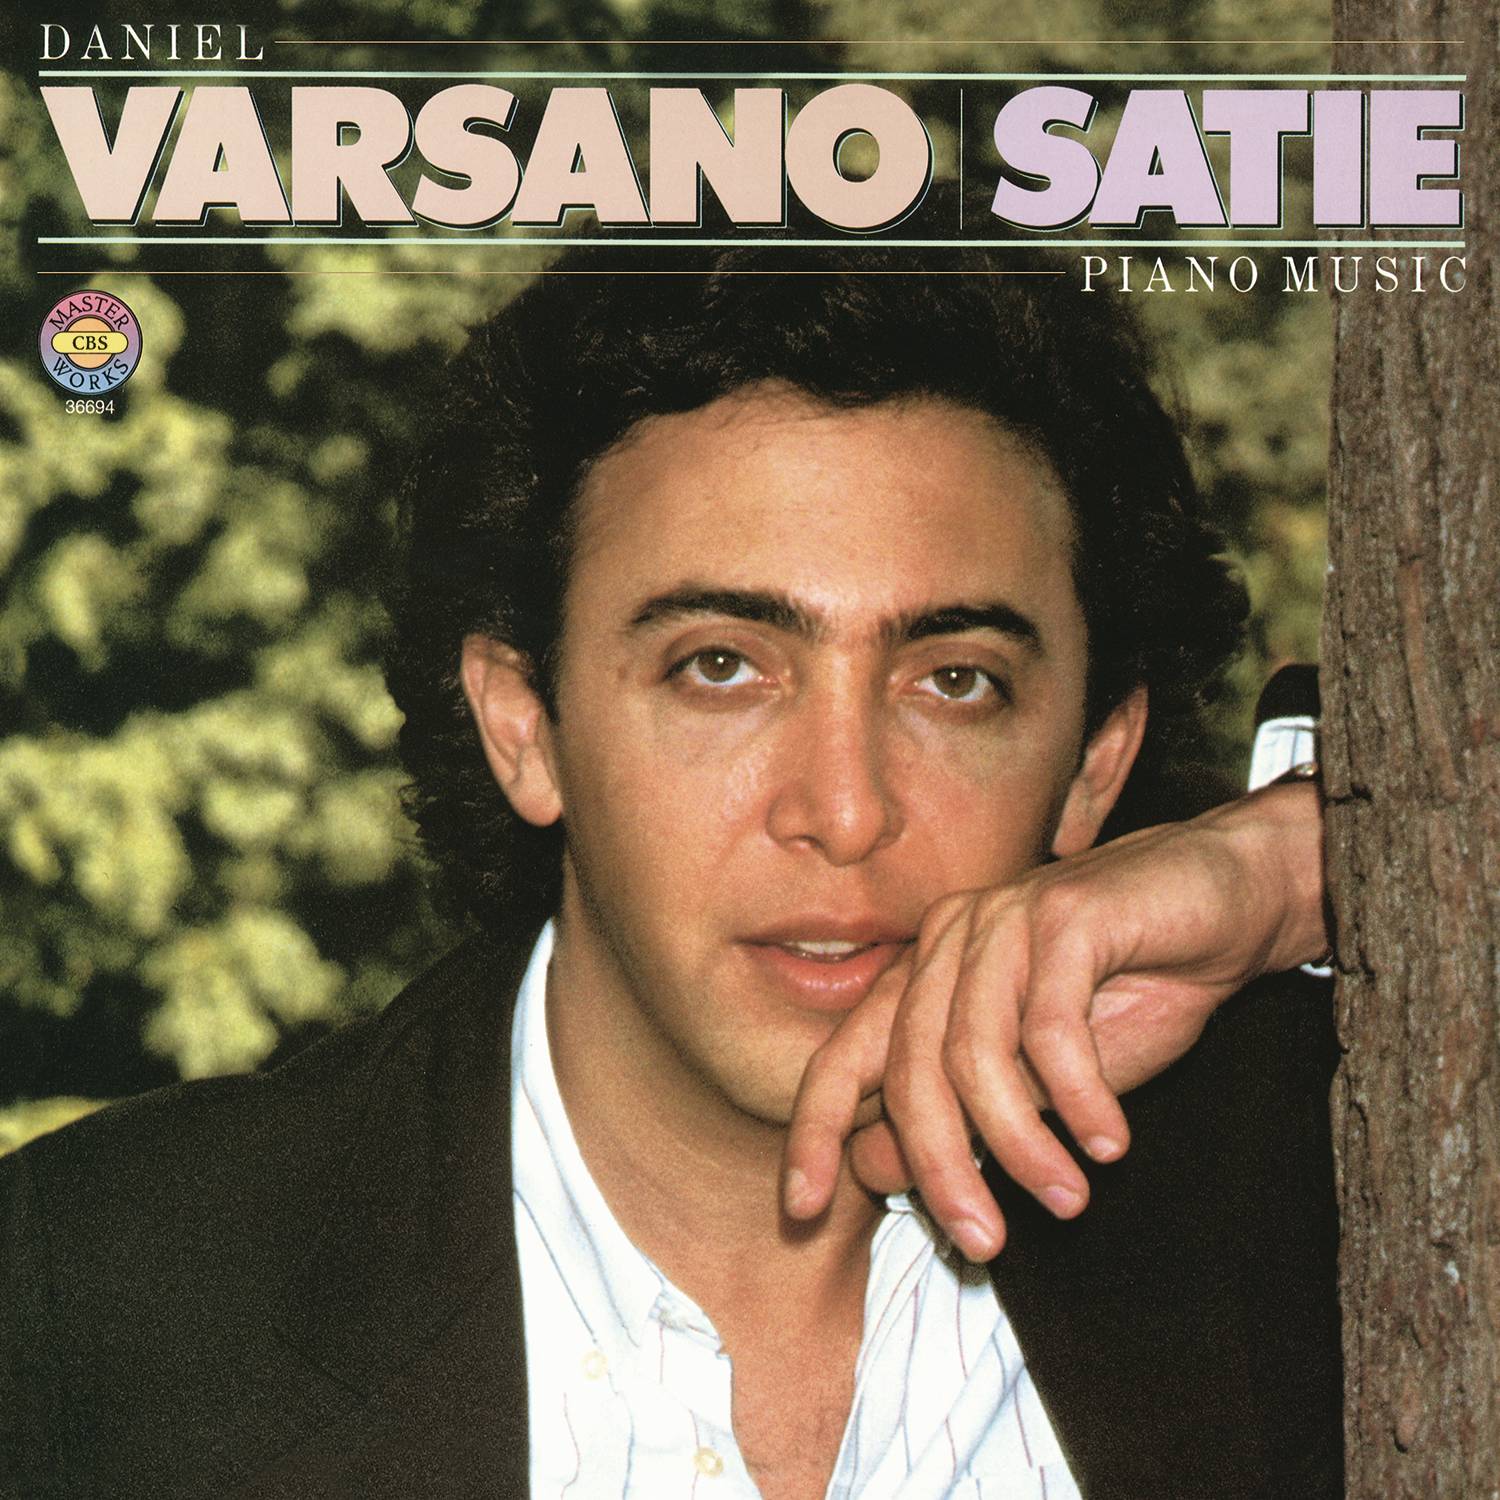 Daniel Varsano Plays Satie Piano Music